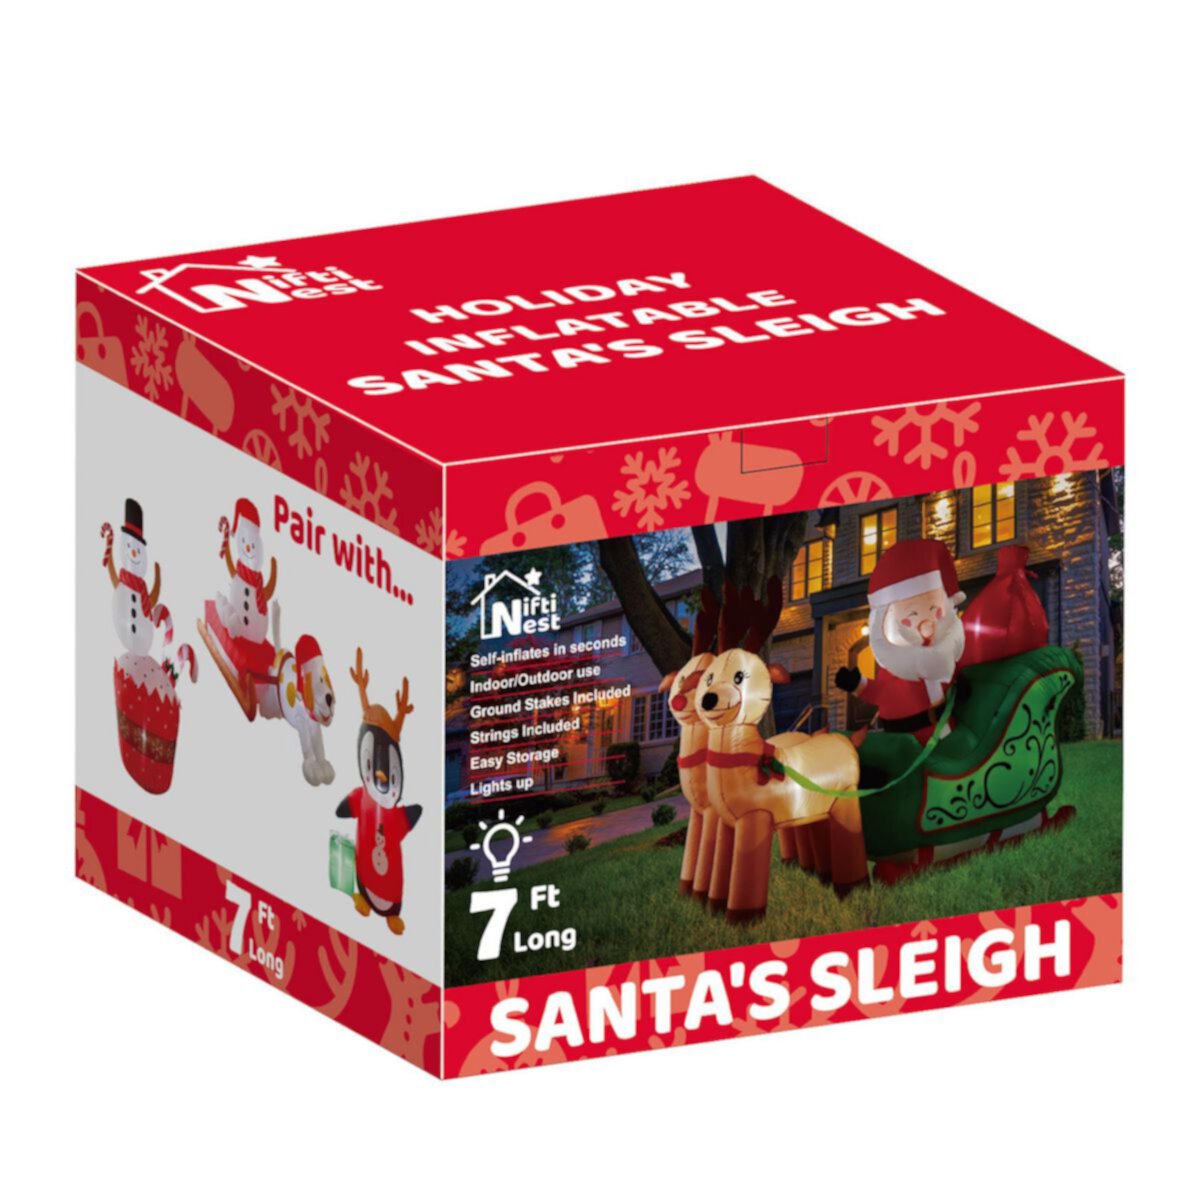 7' Ft Long Santa's Sleigh Holiday Inflatable Popfun